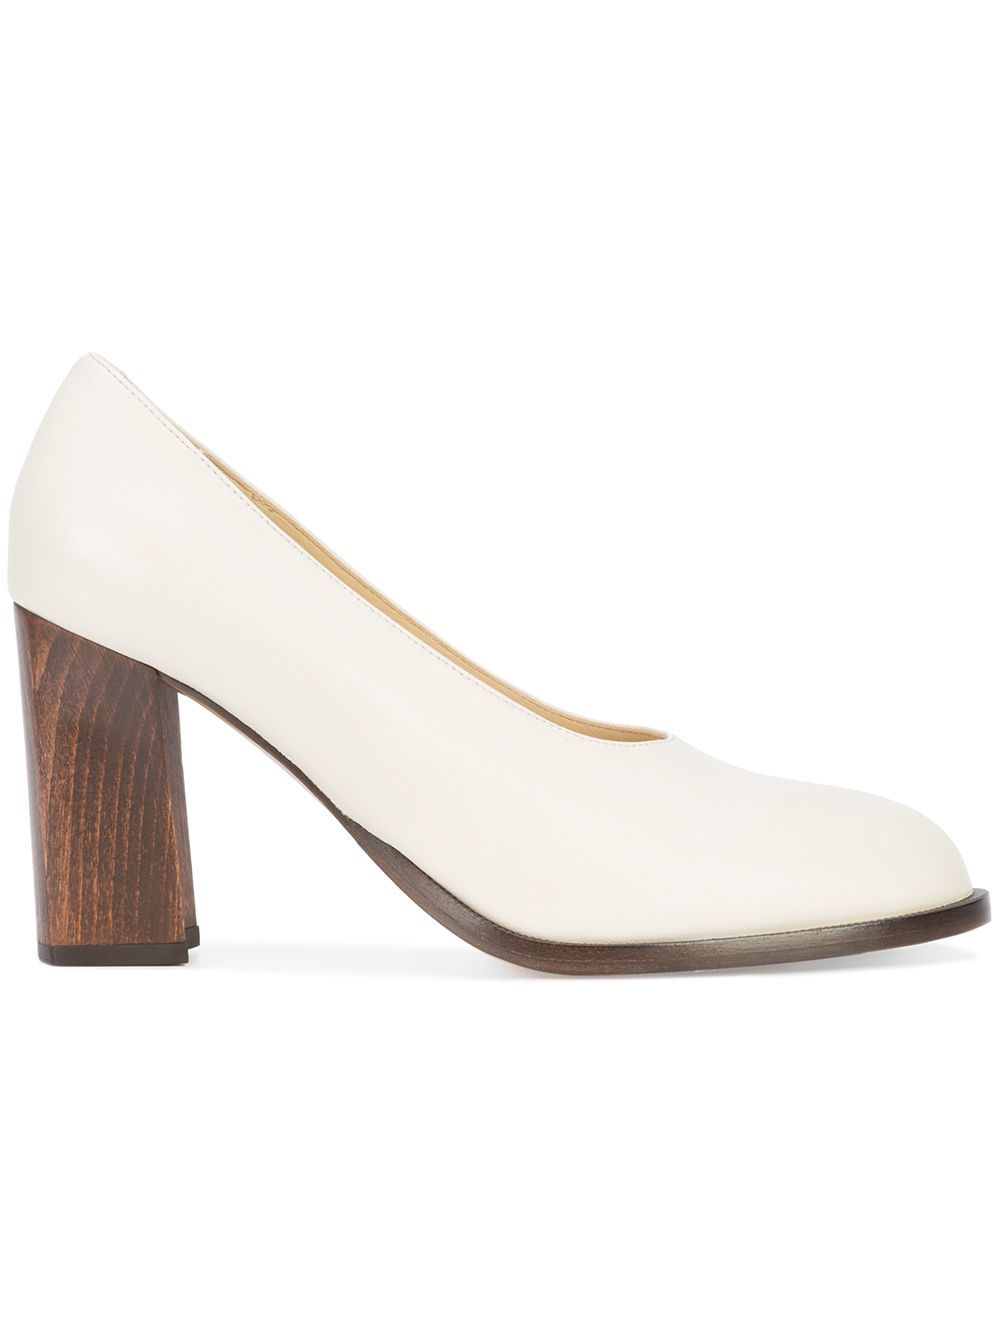 Co block heel pumps - White | FarFetch US